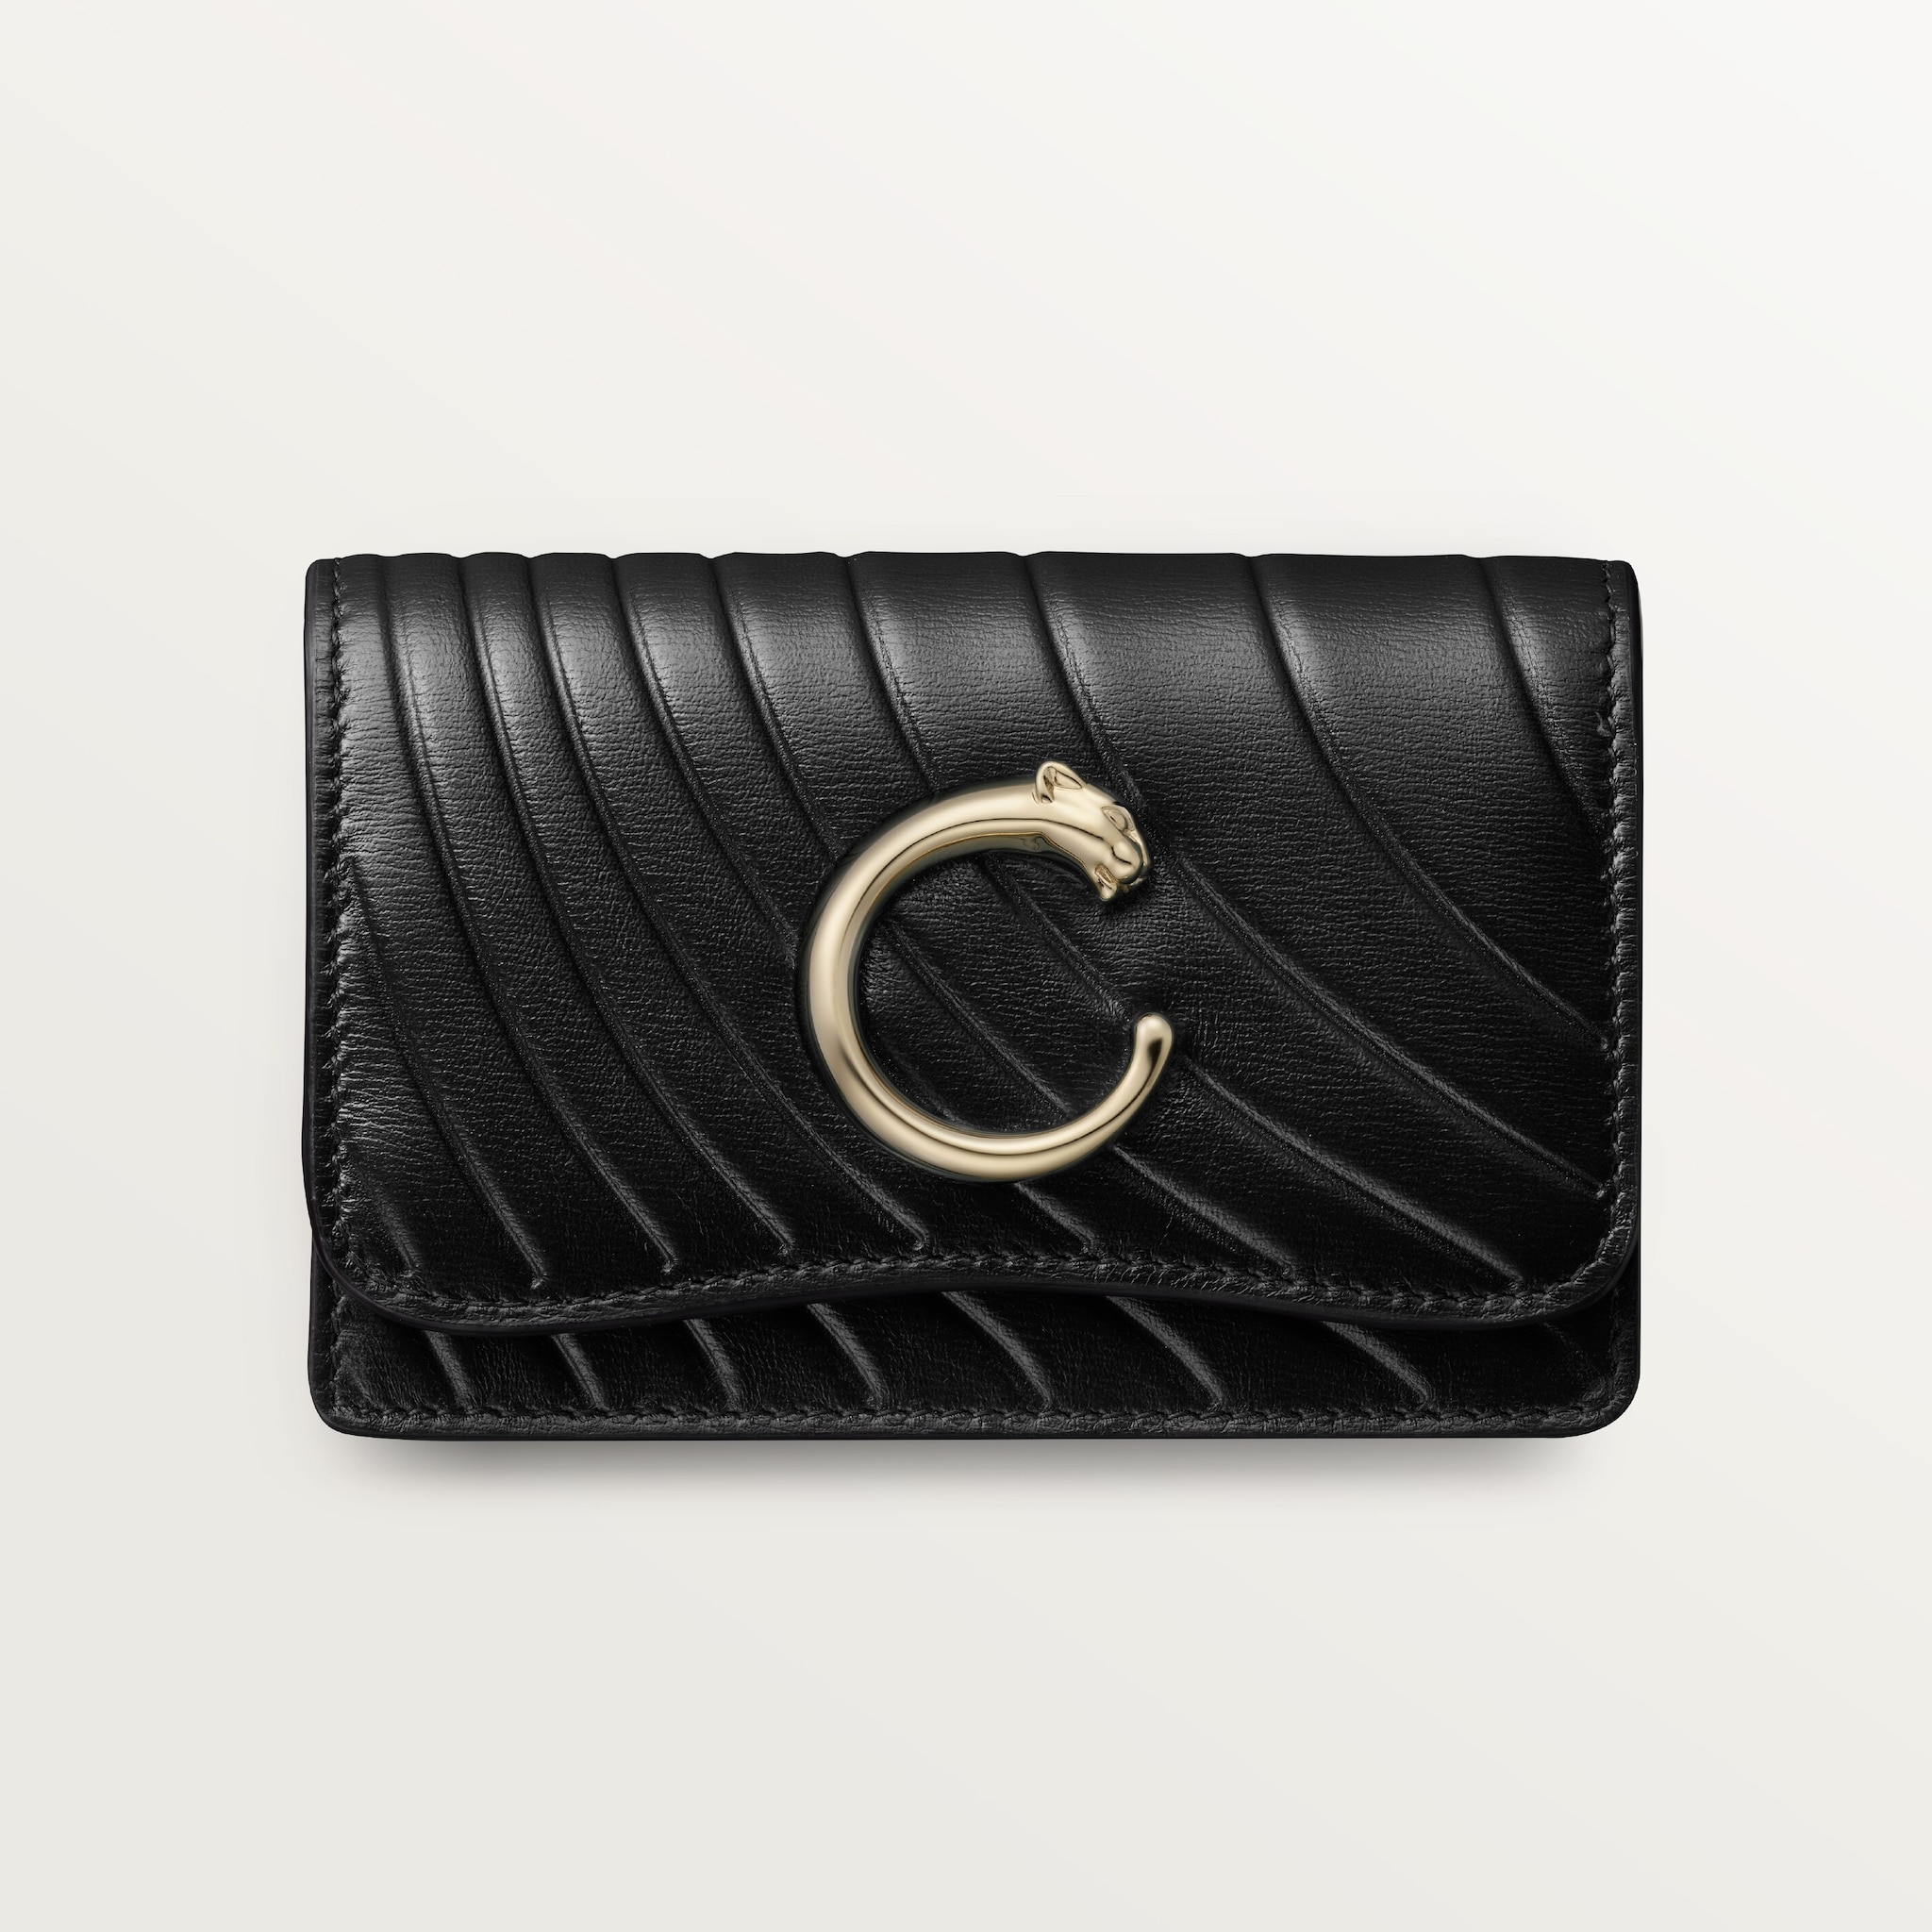 Mini wallet, Panthère de CartierBlack calfskin, embossed Cartier signature motif, golden finish